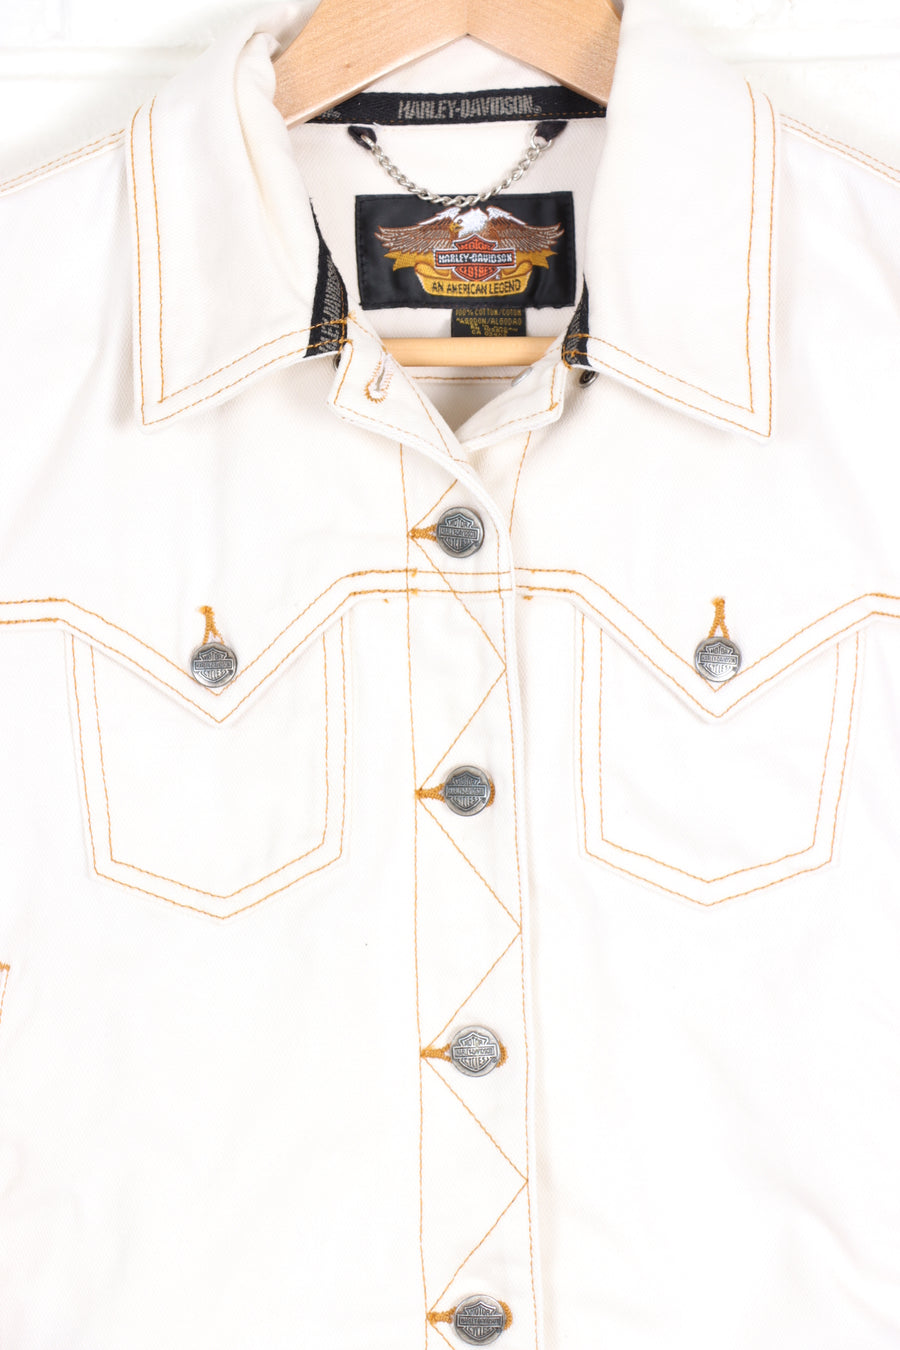 HARLEY DAVIDSON Button Up Embroidered Badge Jacket (Women's M)